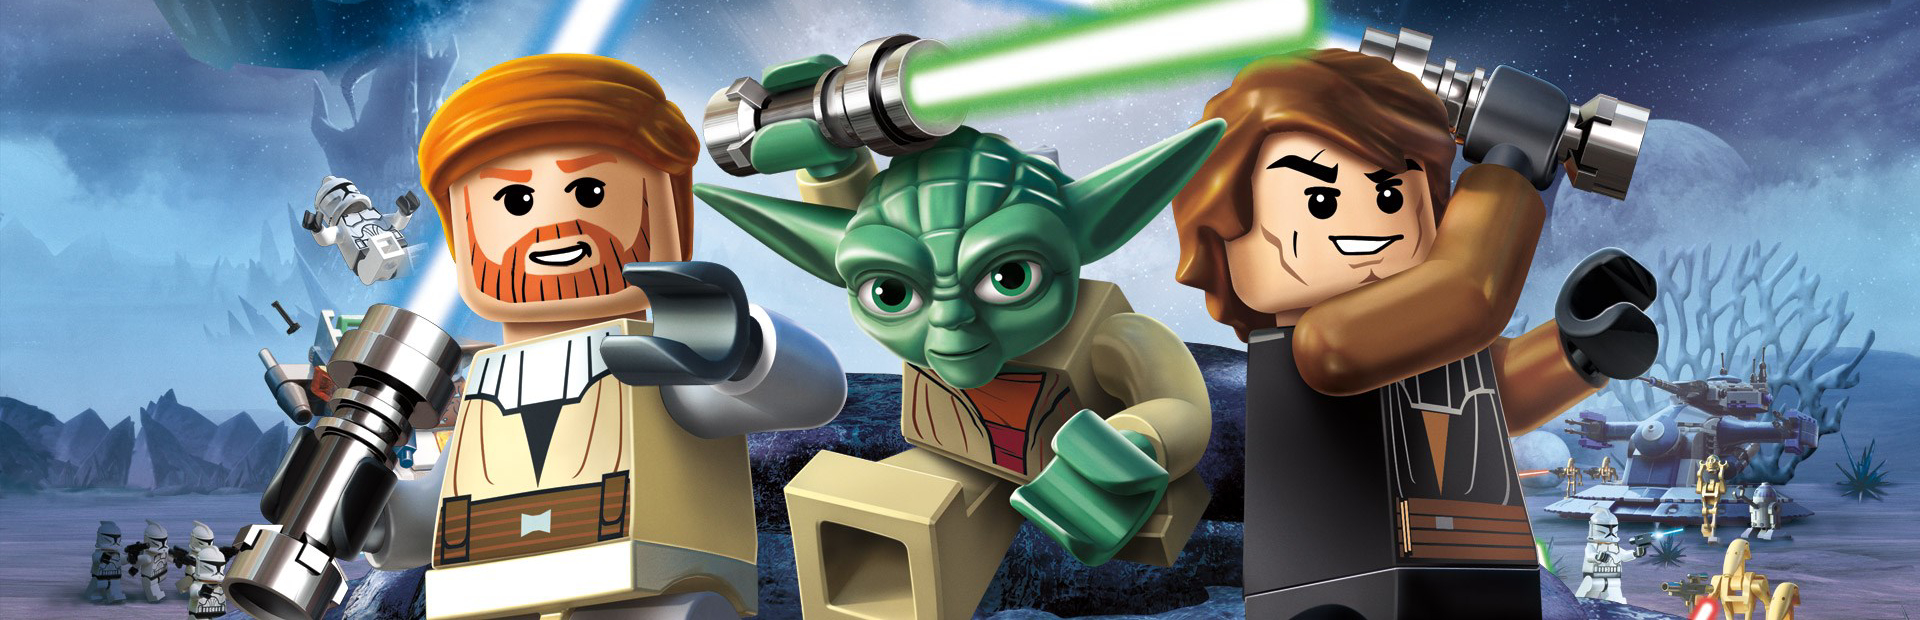 LEGO® Star Wars™ III - The Clone Wars™ on Steam